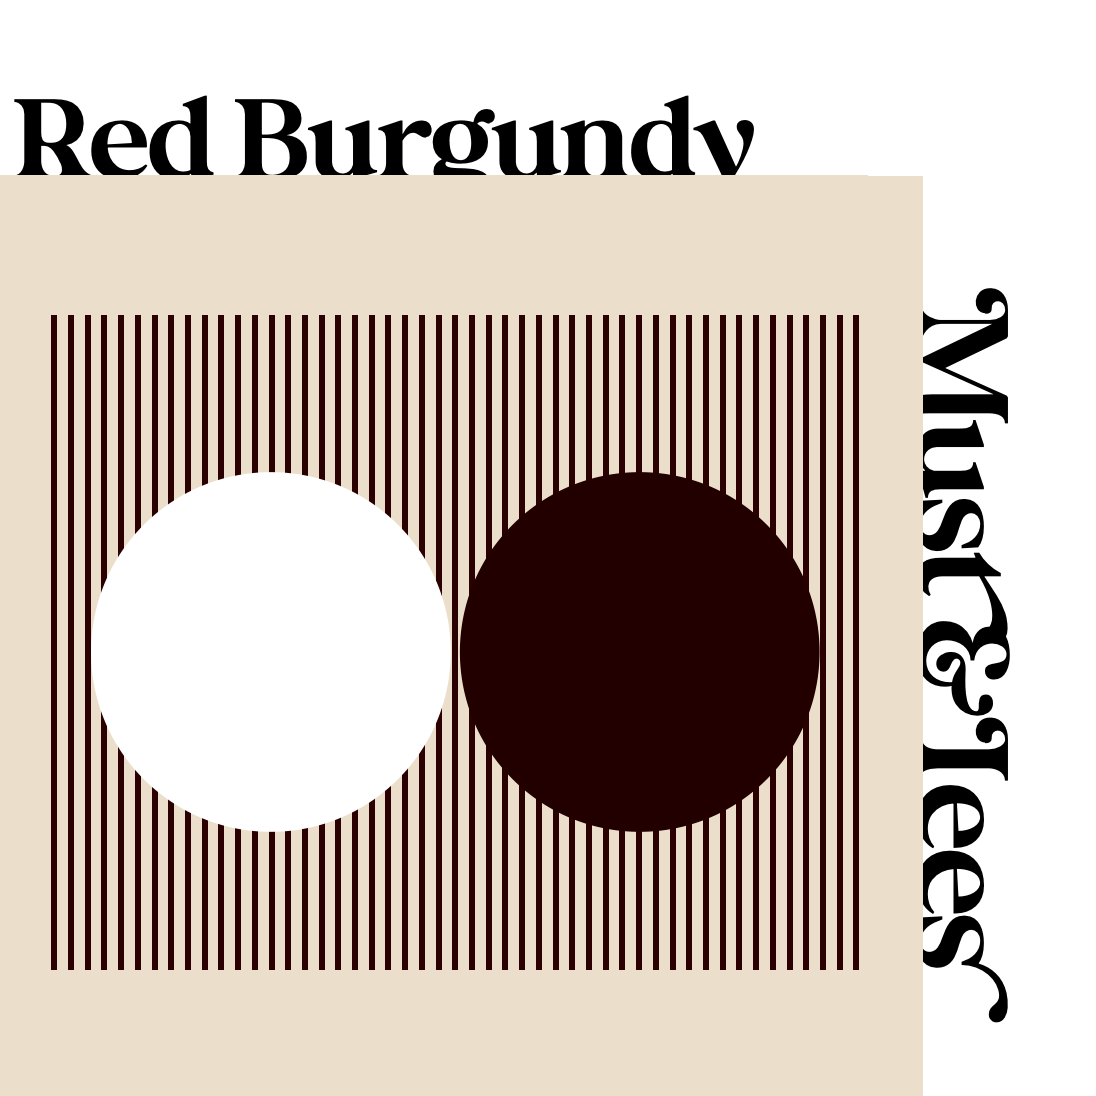 Fitzrovia: Red Burgundy Exploration Tasting - 17th Apr